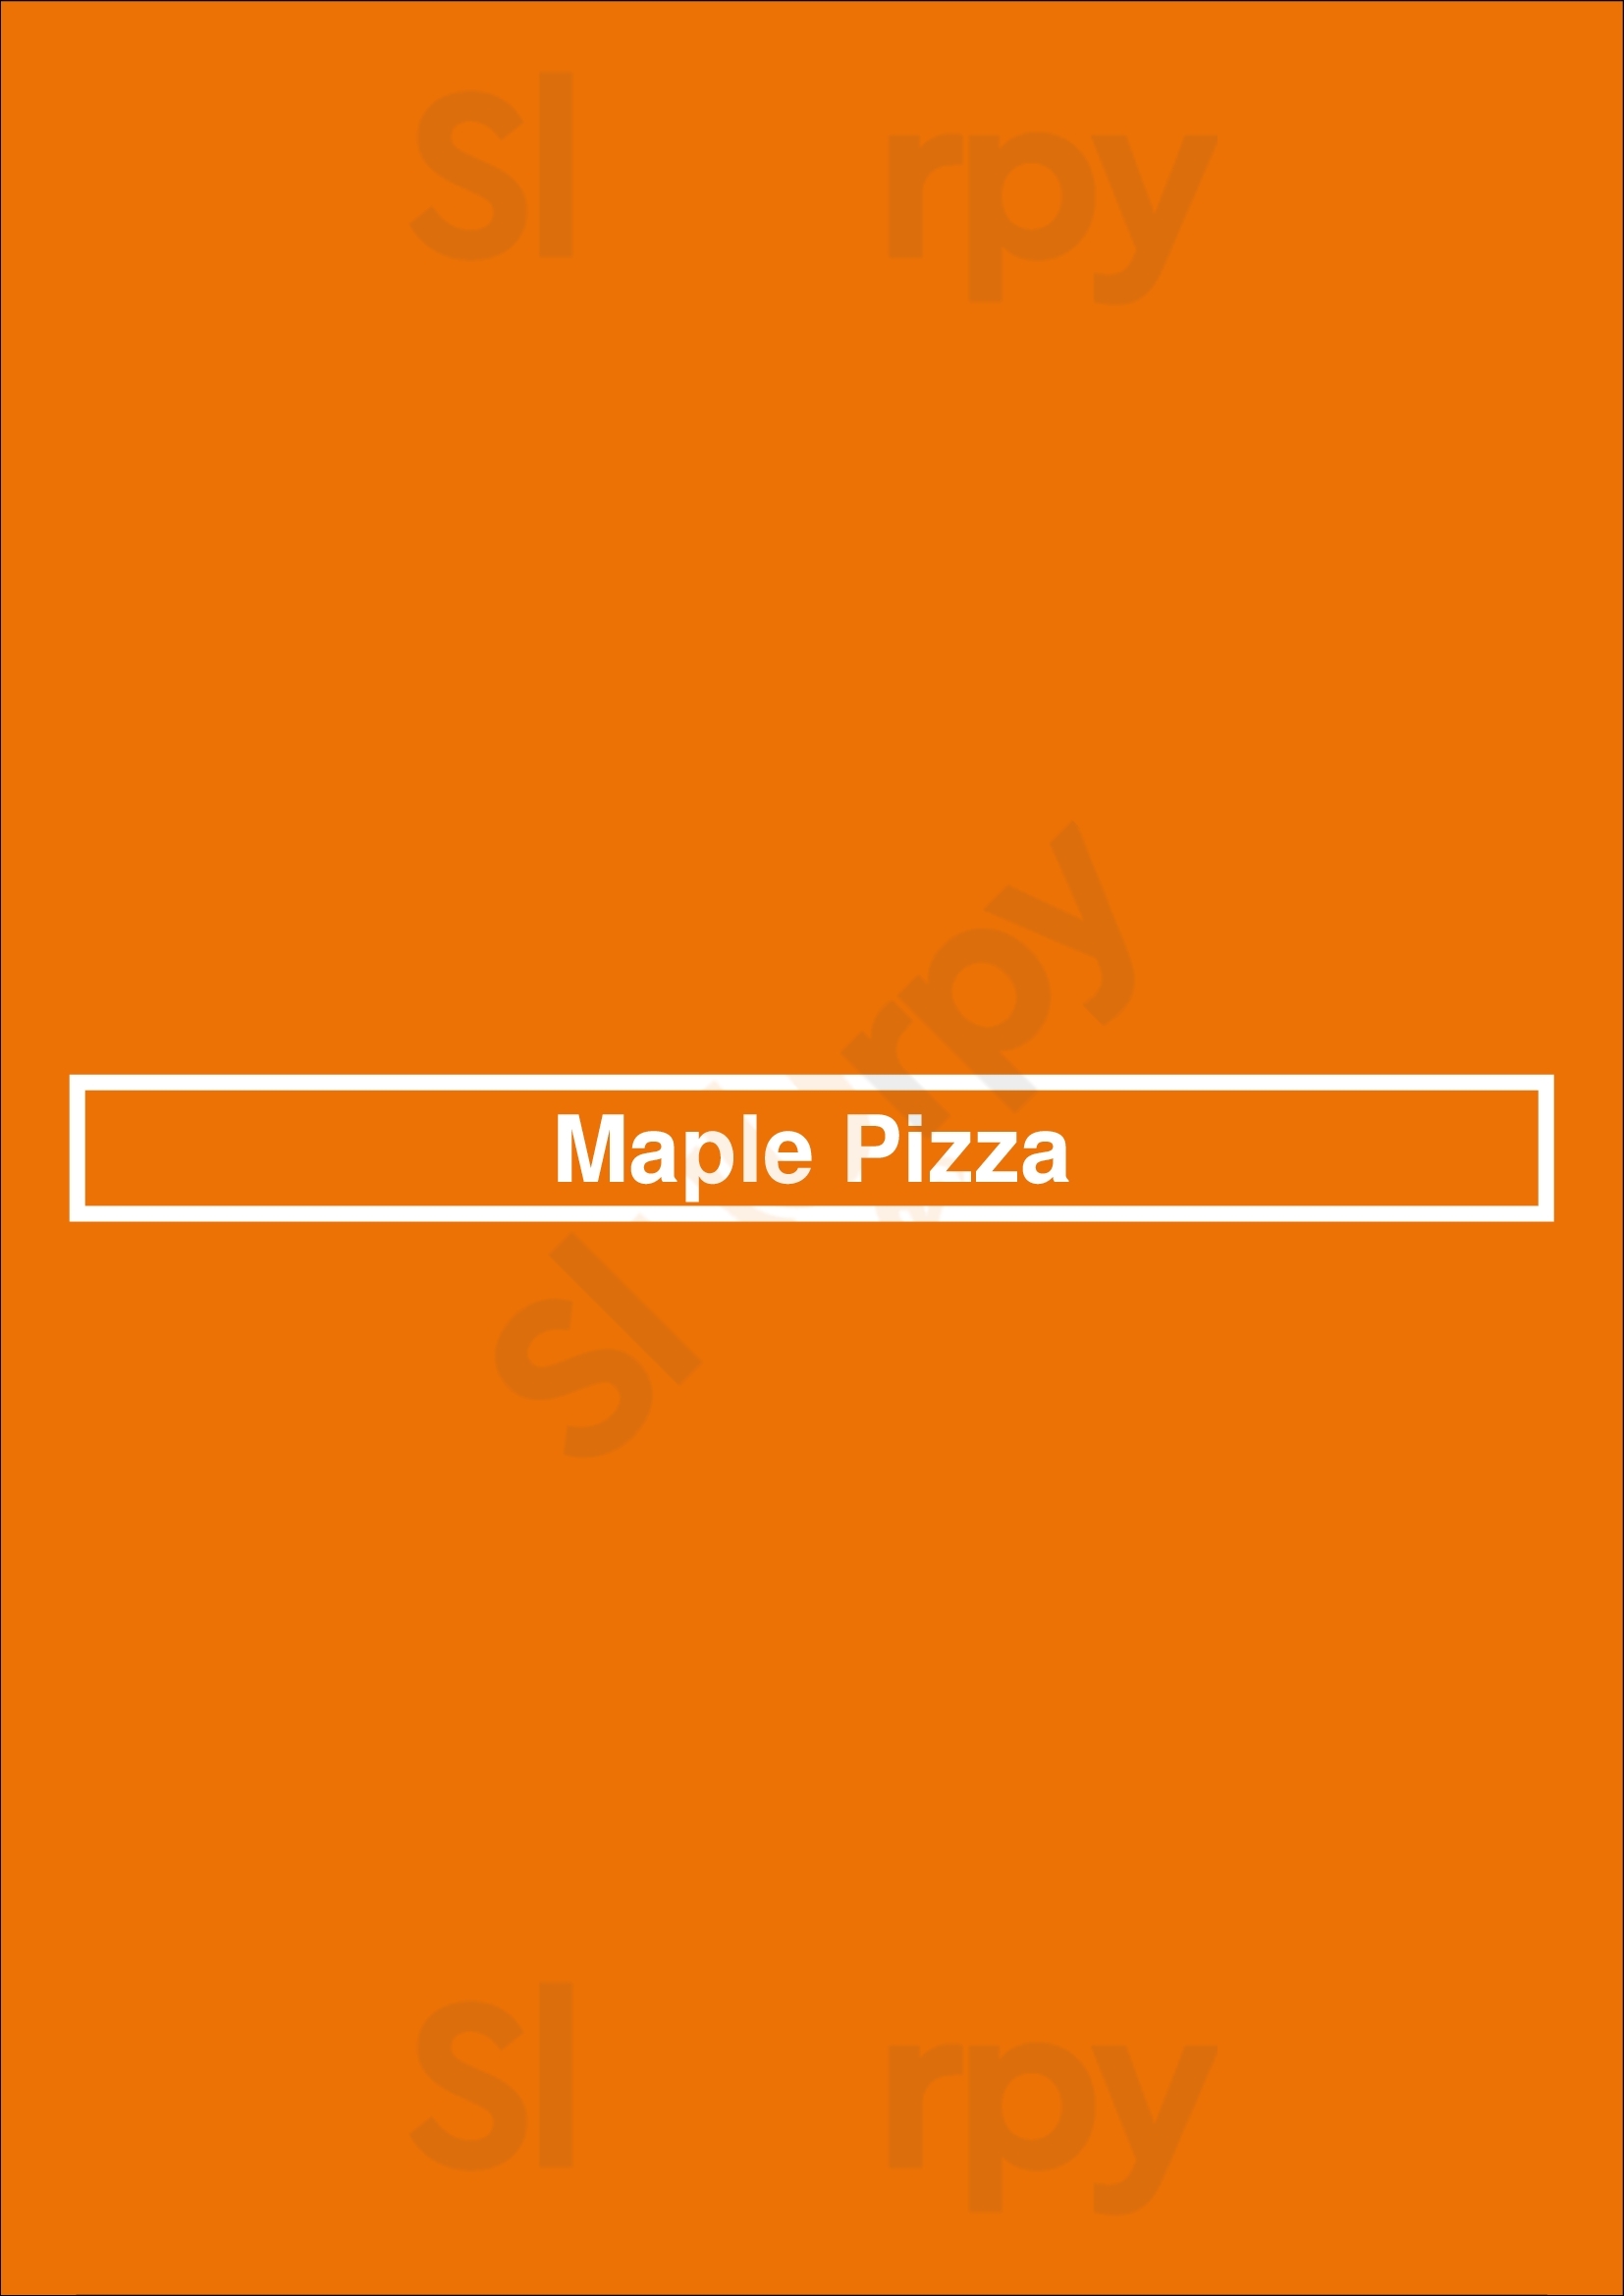 Maple Pizza Surrey Menu - 1